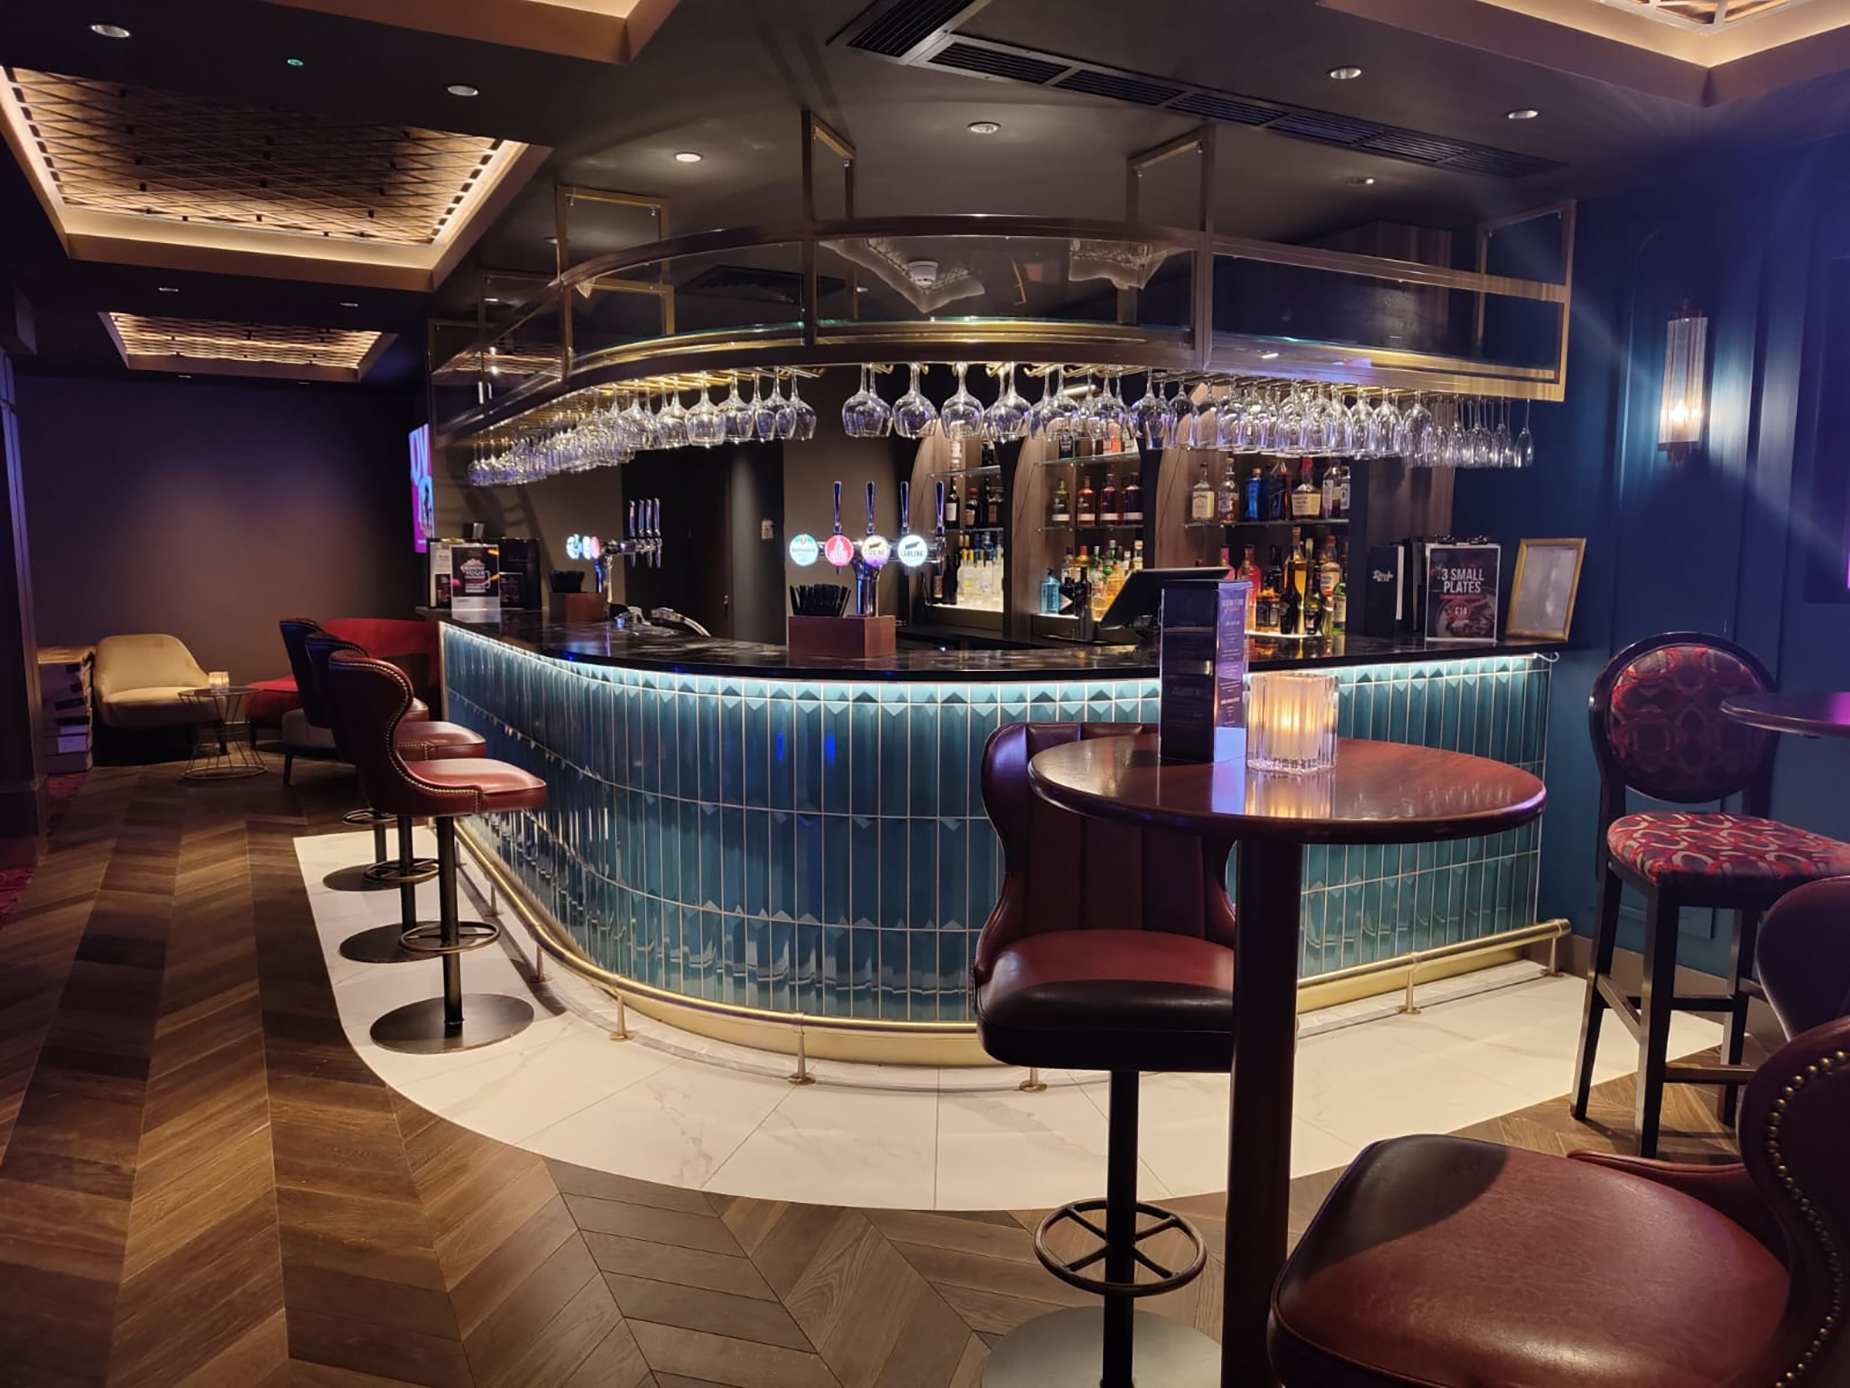 Napoleons Casinos & Restaurant, Bradford